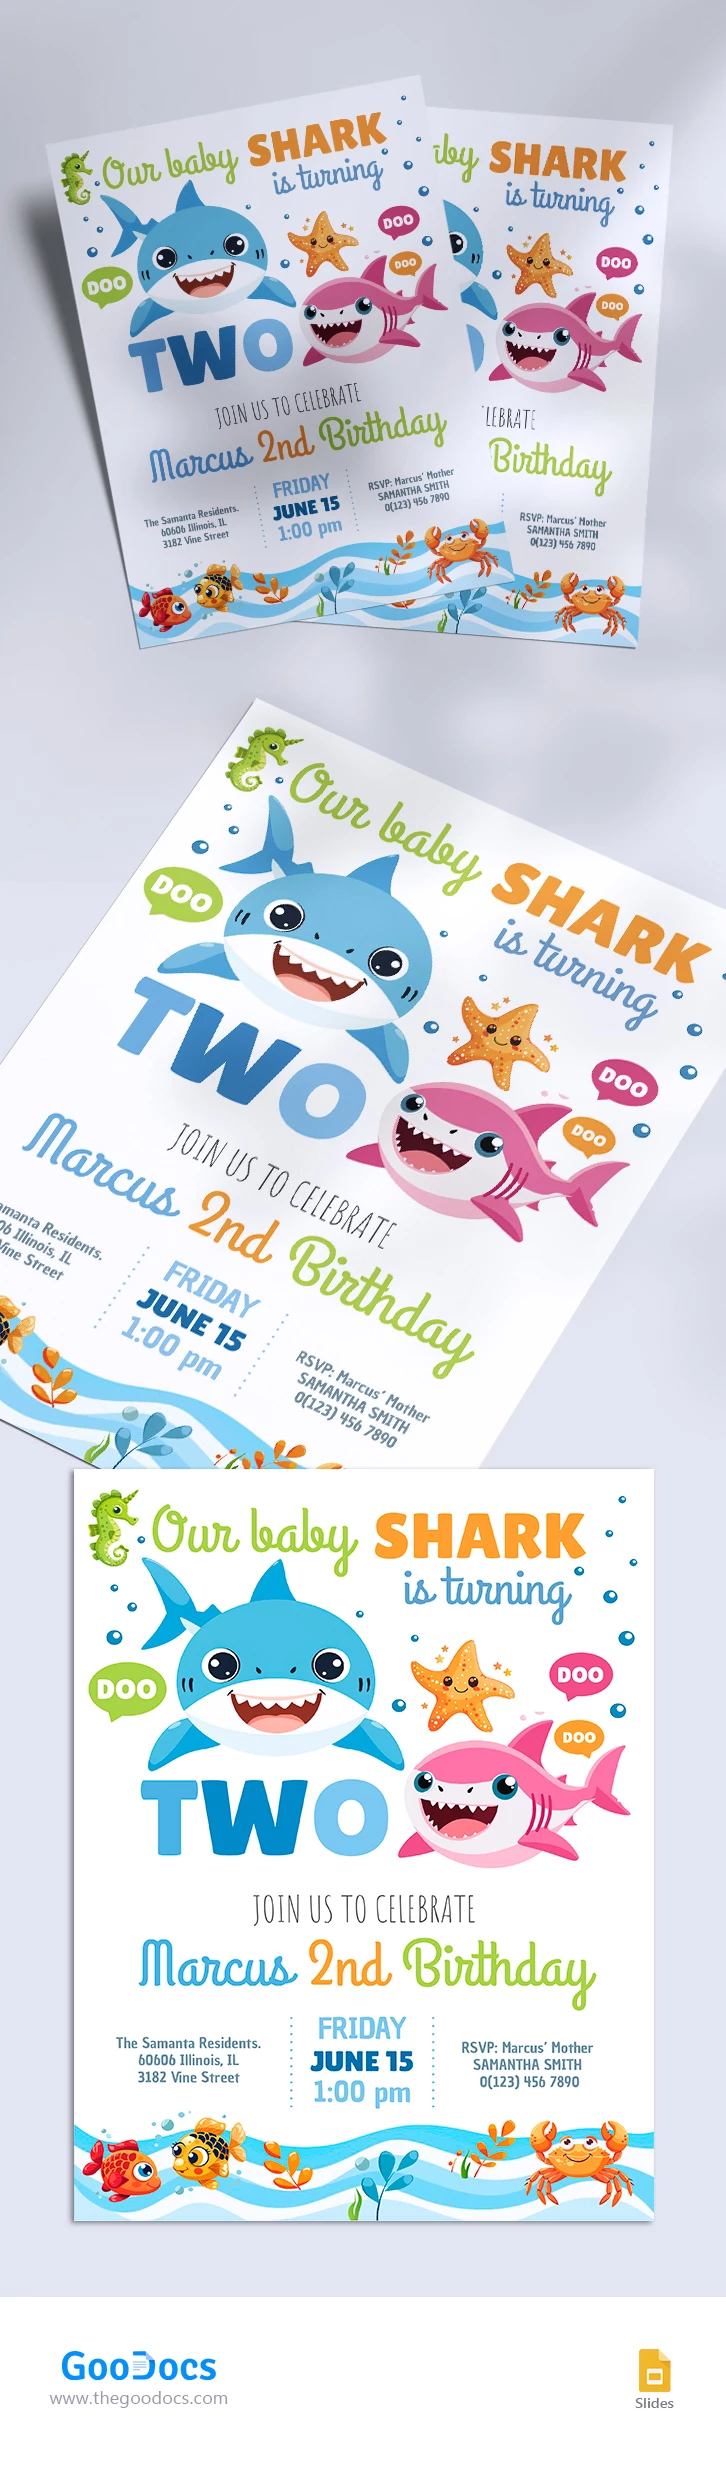 Baby Shark Einladung - free Google Docs Template - 10068413